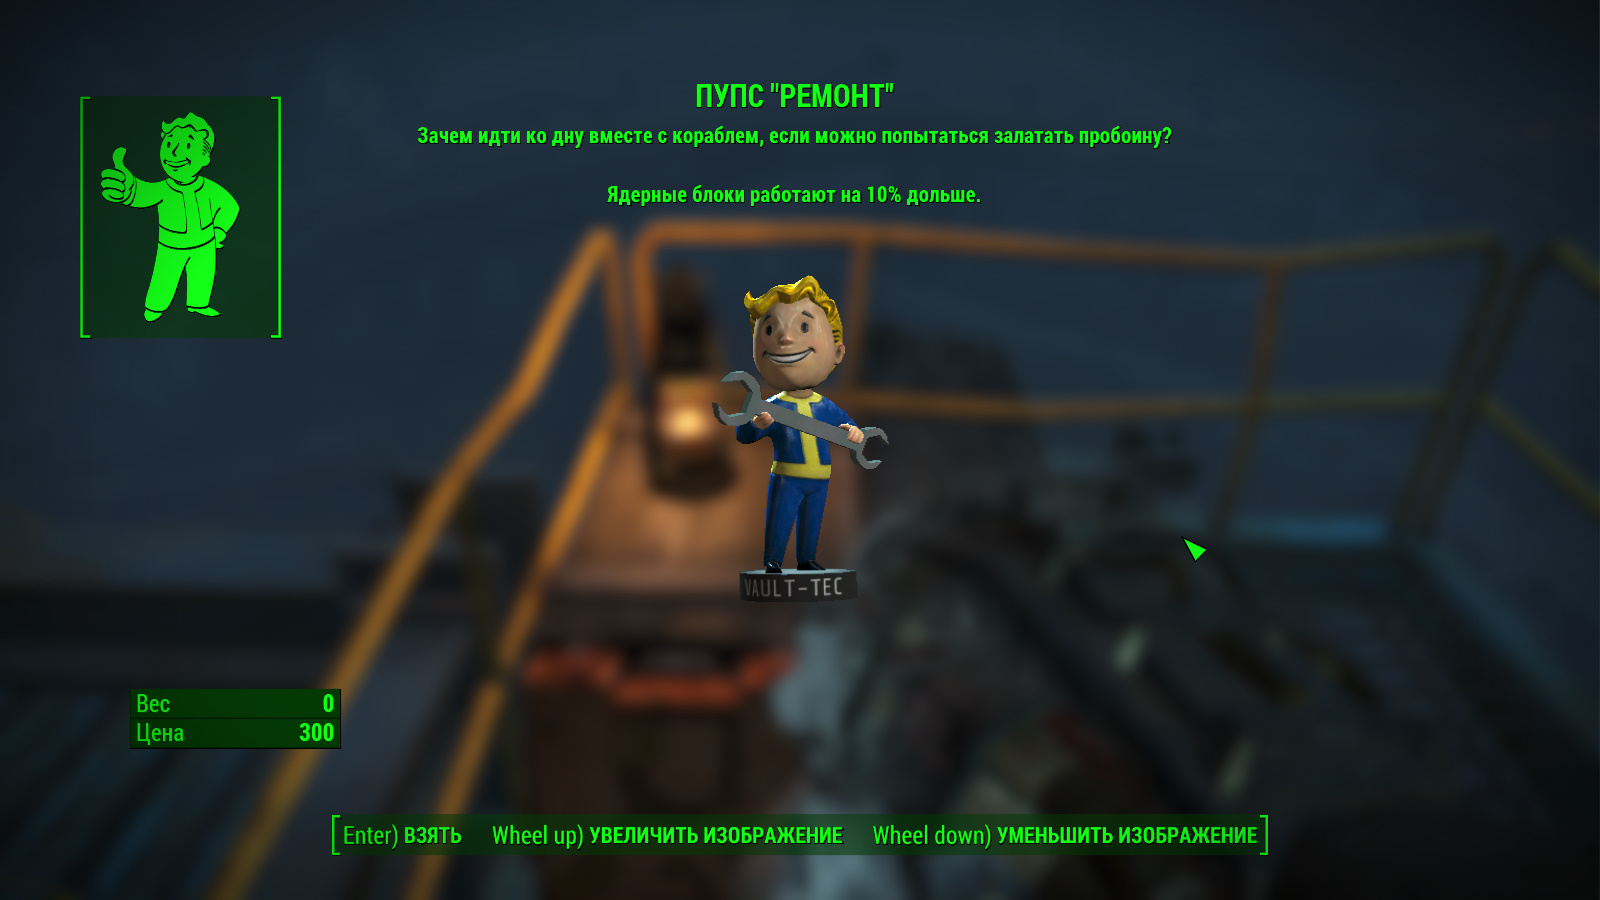 Fallout 4 пупсы волт тек фото 2